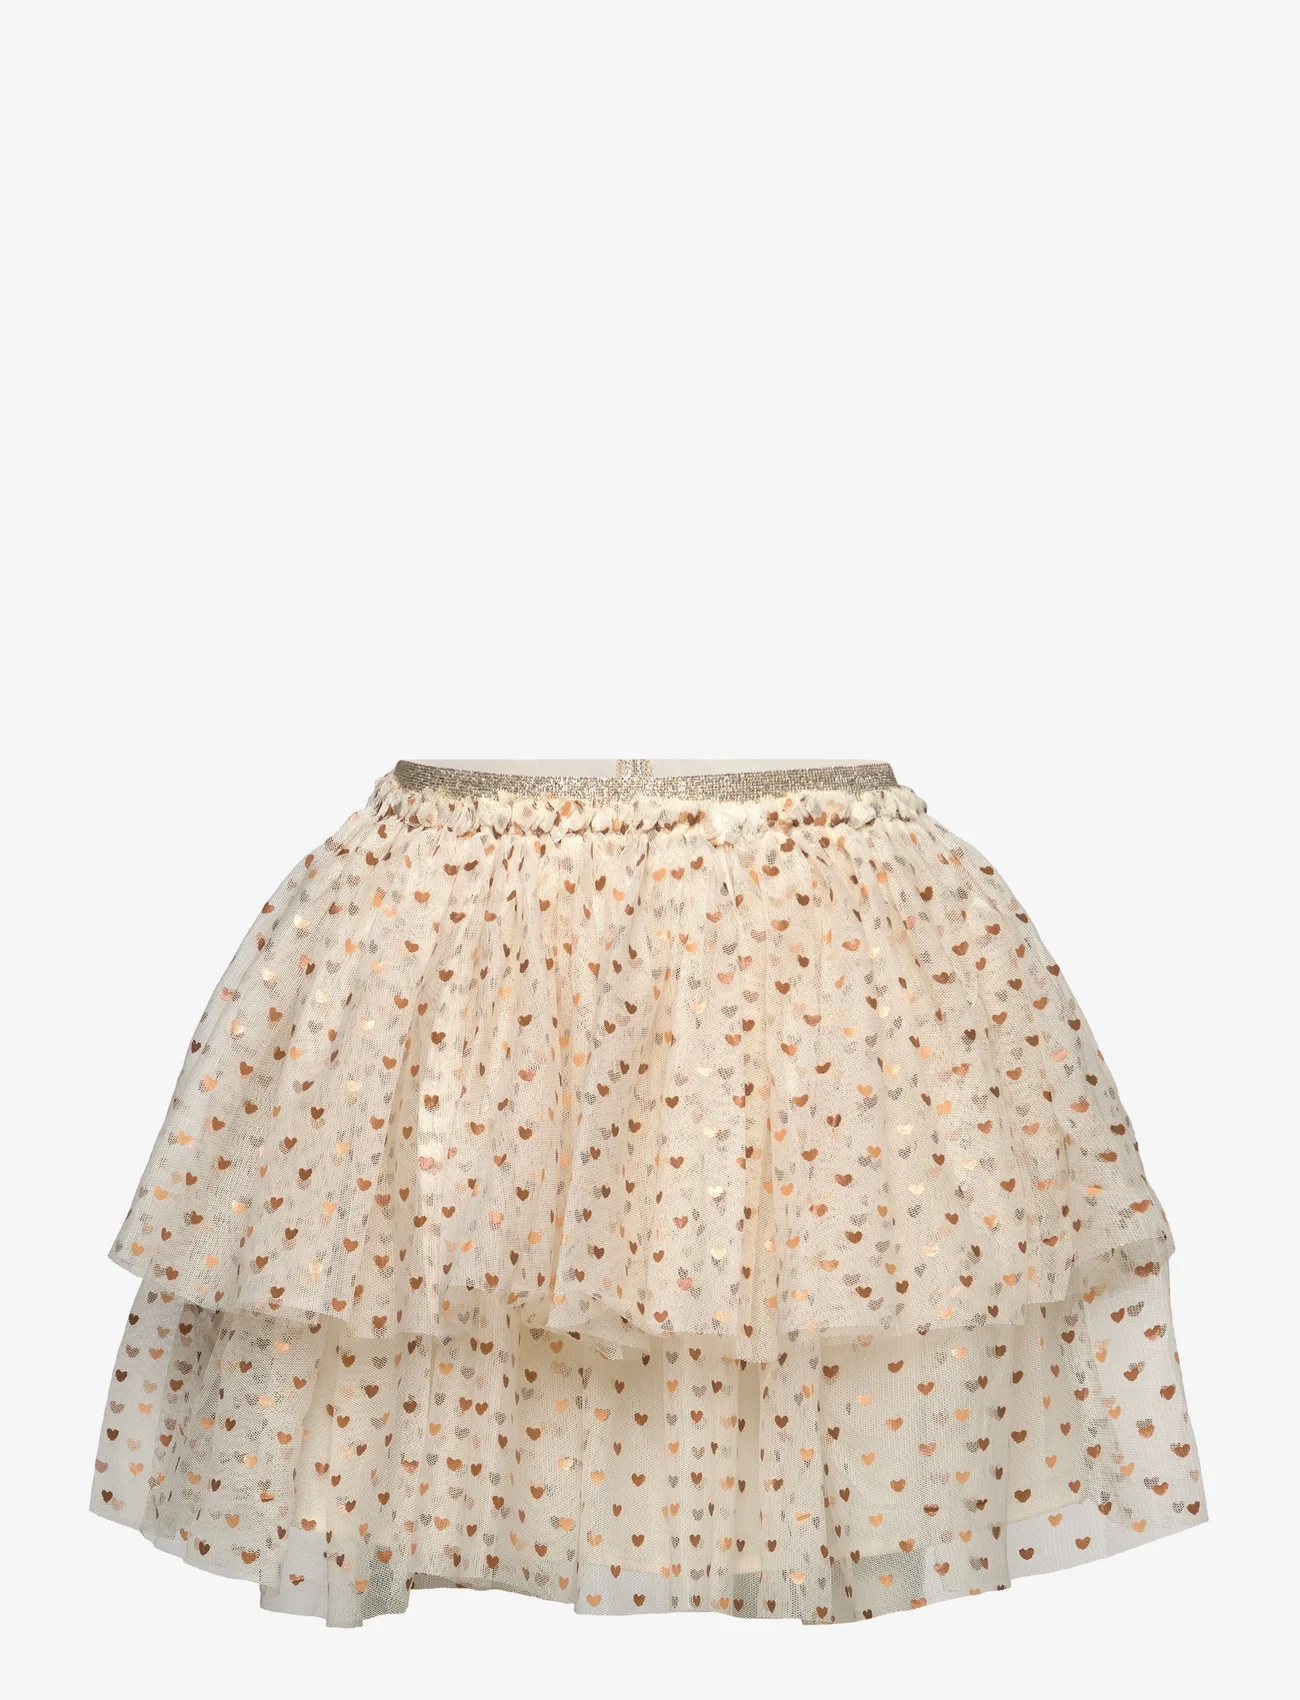 Sofie Schnoor Baby and Kids - Skirt - antique white - 0